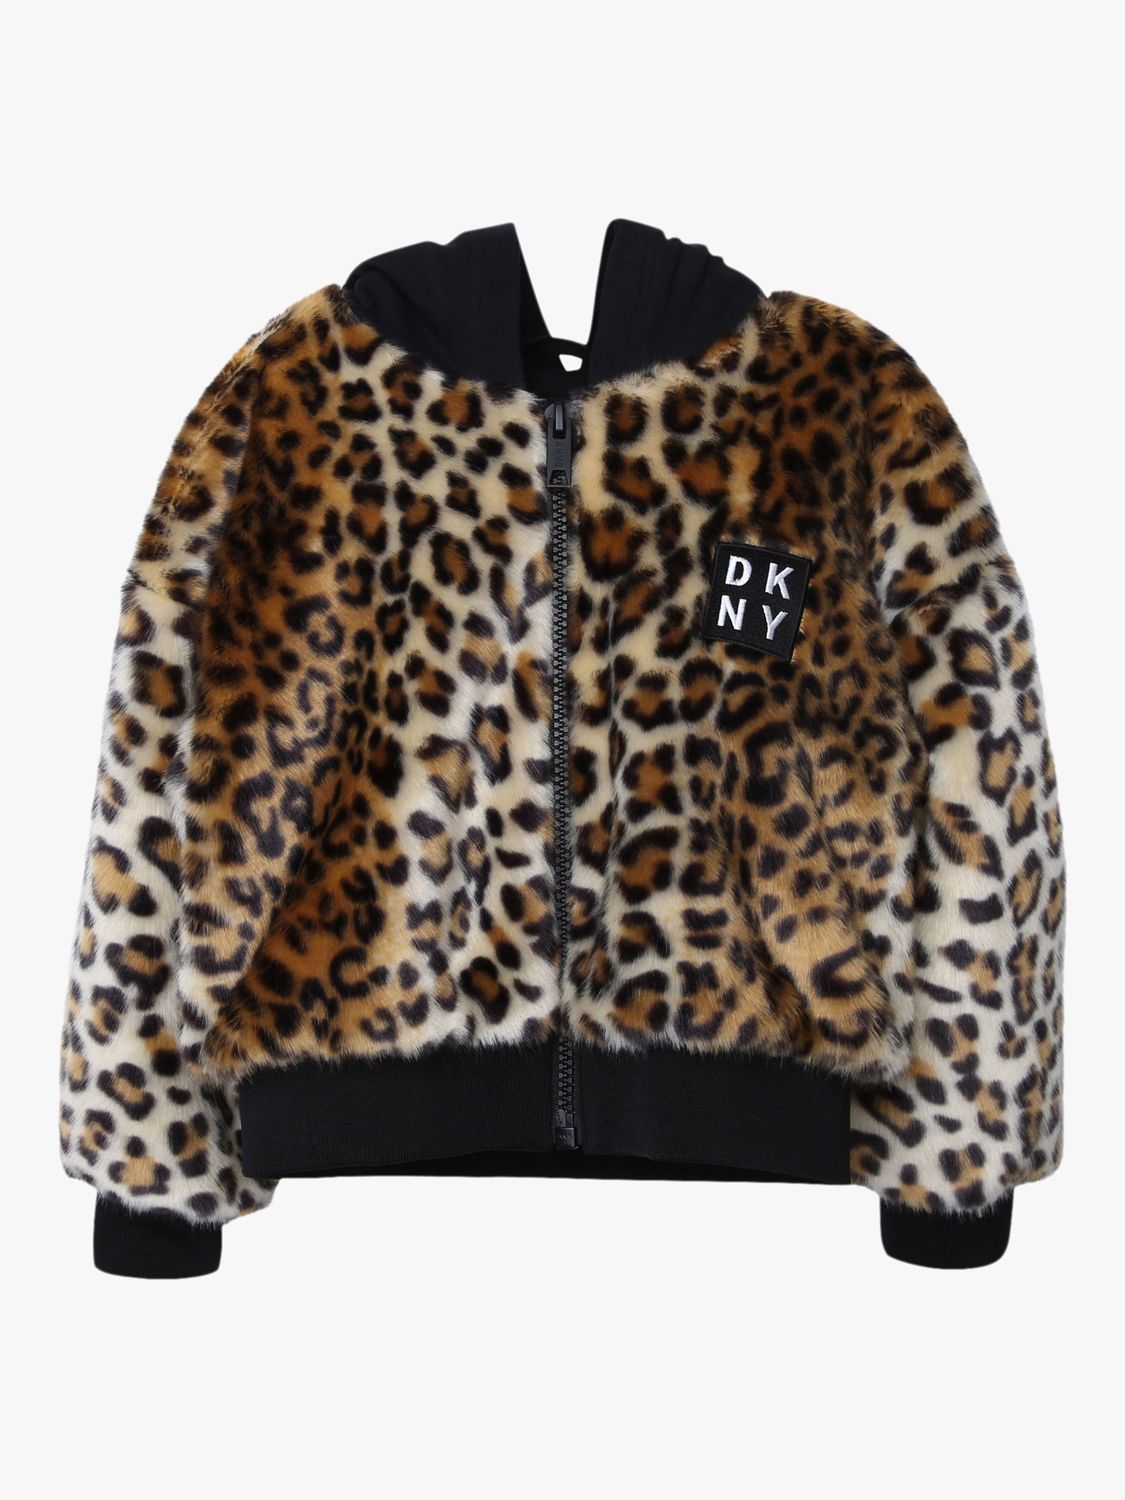 DKNY Girls' Leopard Print Jacket, Multi at John Lewis & Partners